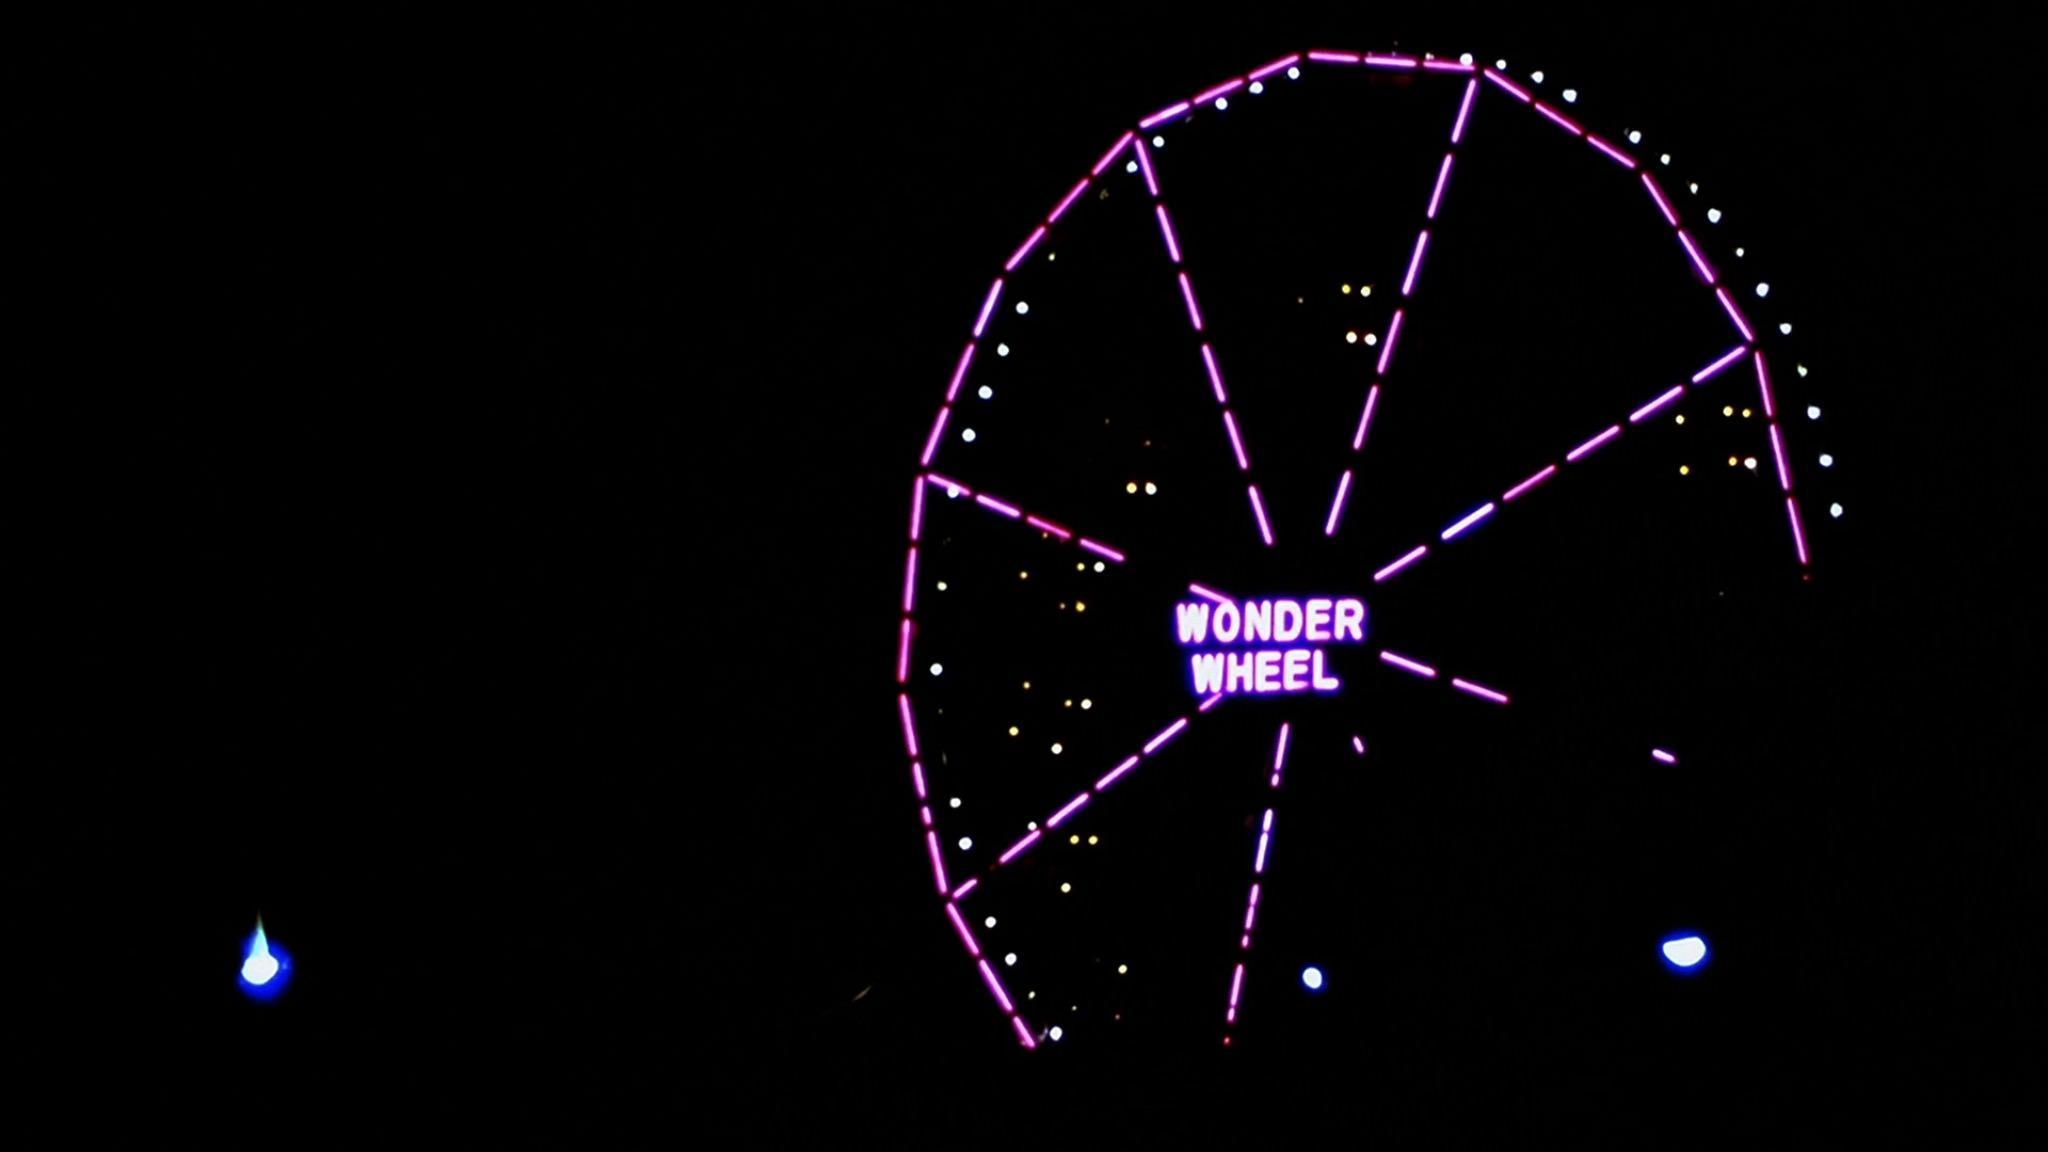 Wonder Wheel the opening scene of the movie The Warriors